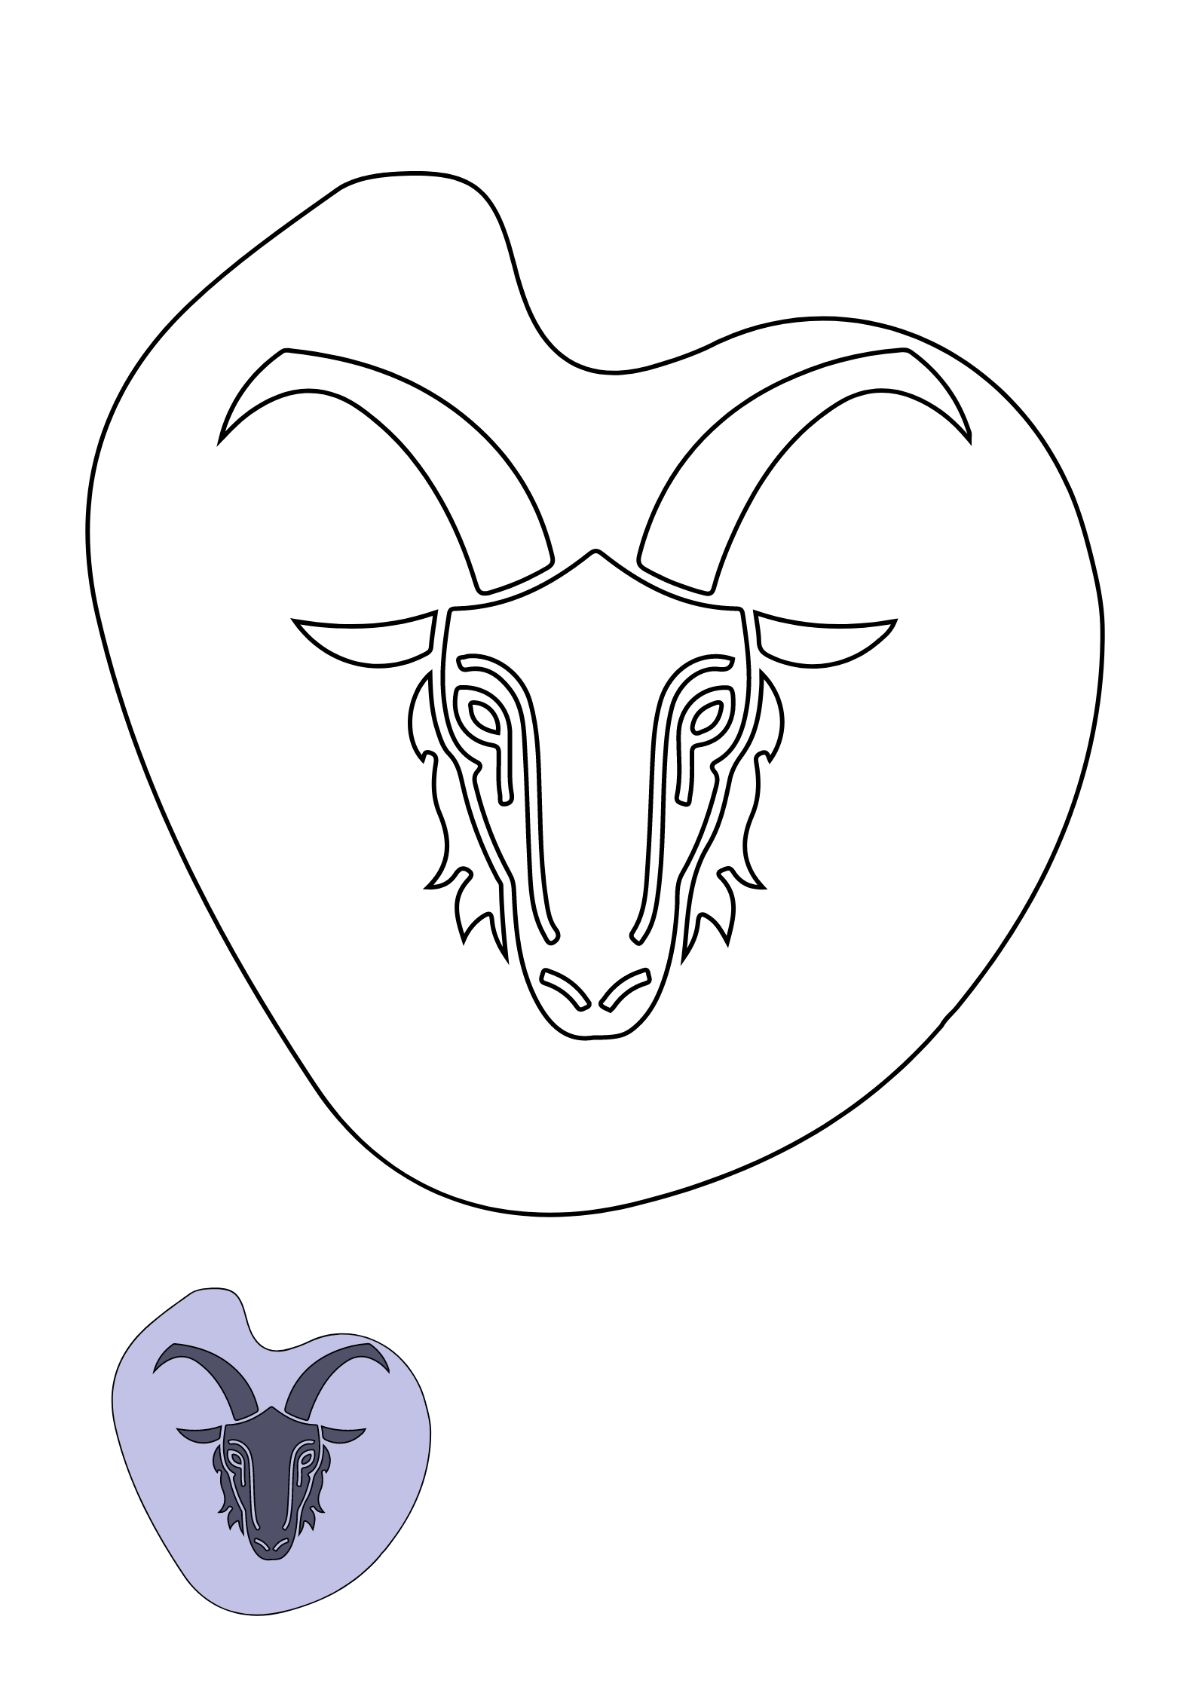 Capricorn Head coloring page